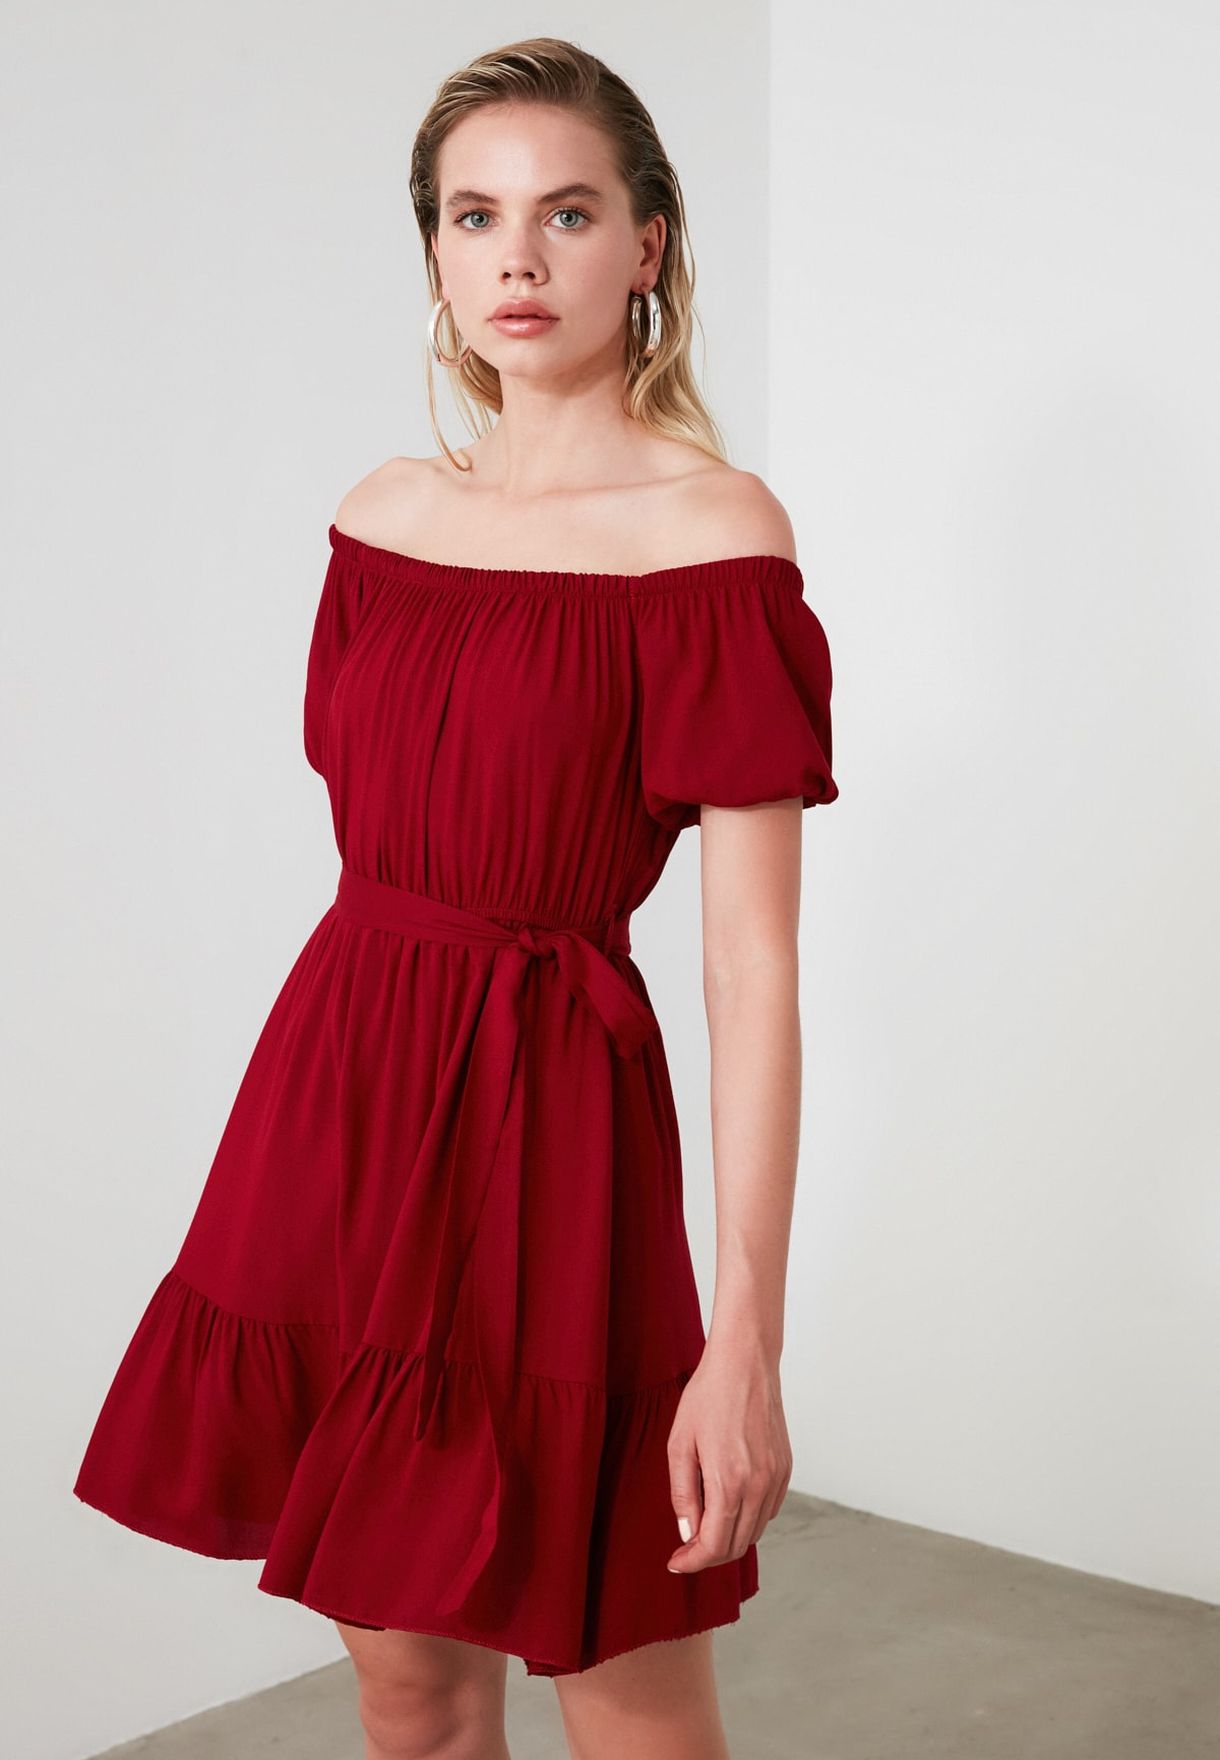 burgundy bardot dress